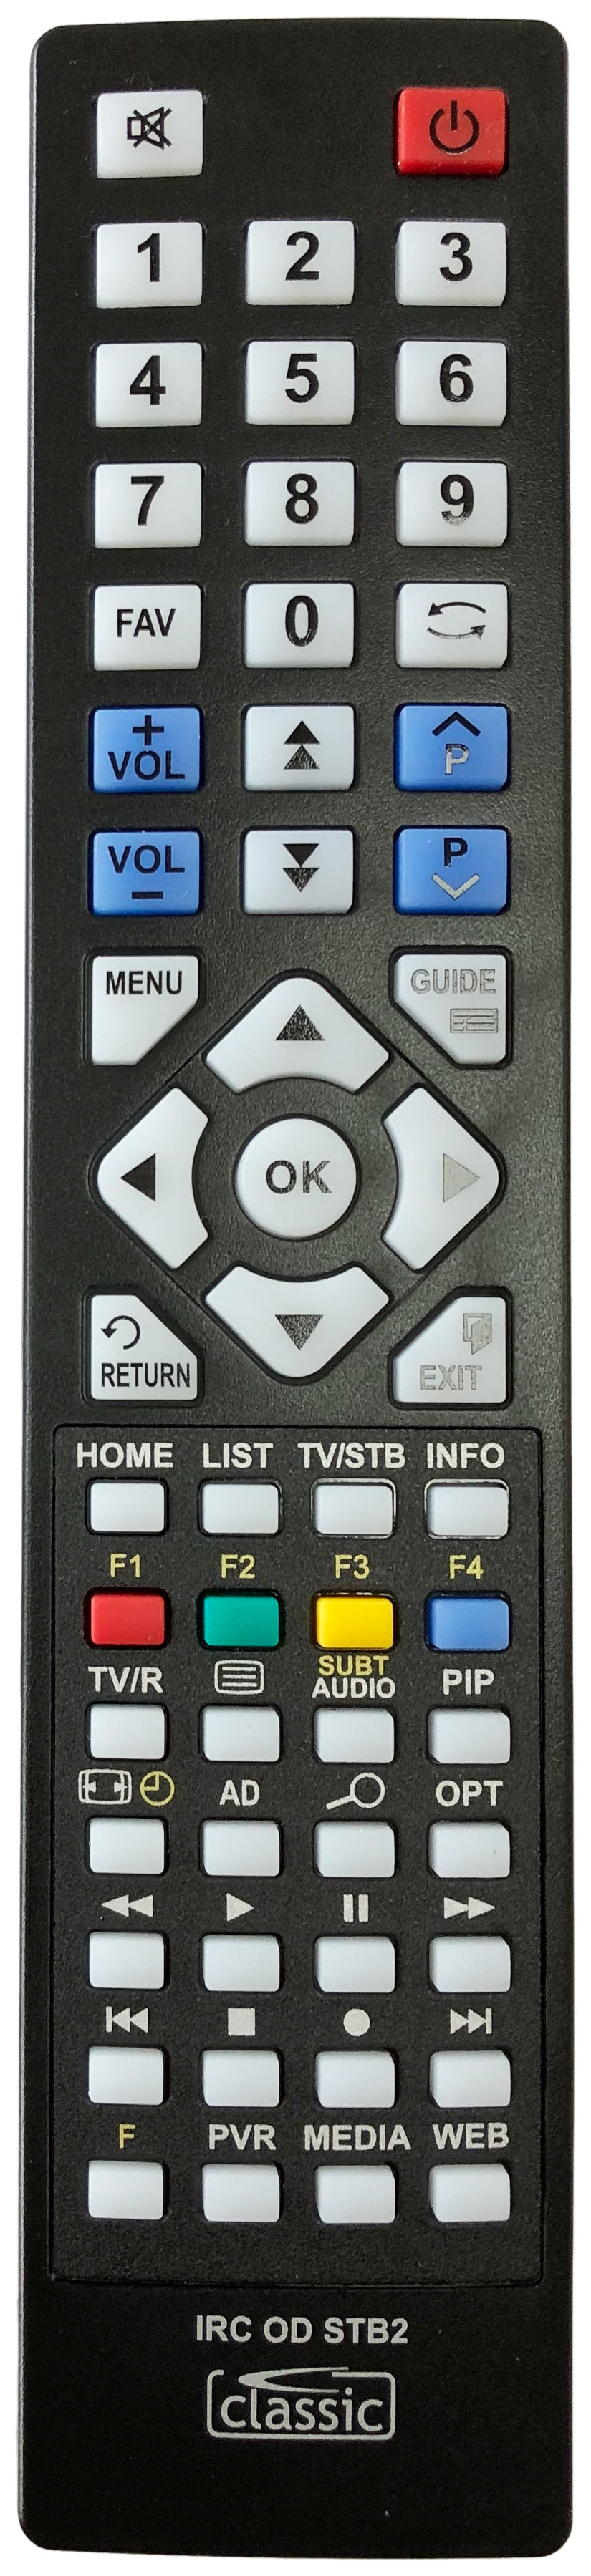 HUMAX HB-1000S Remote Control Alternative